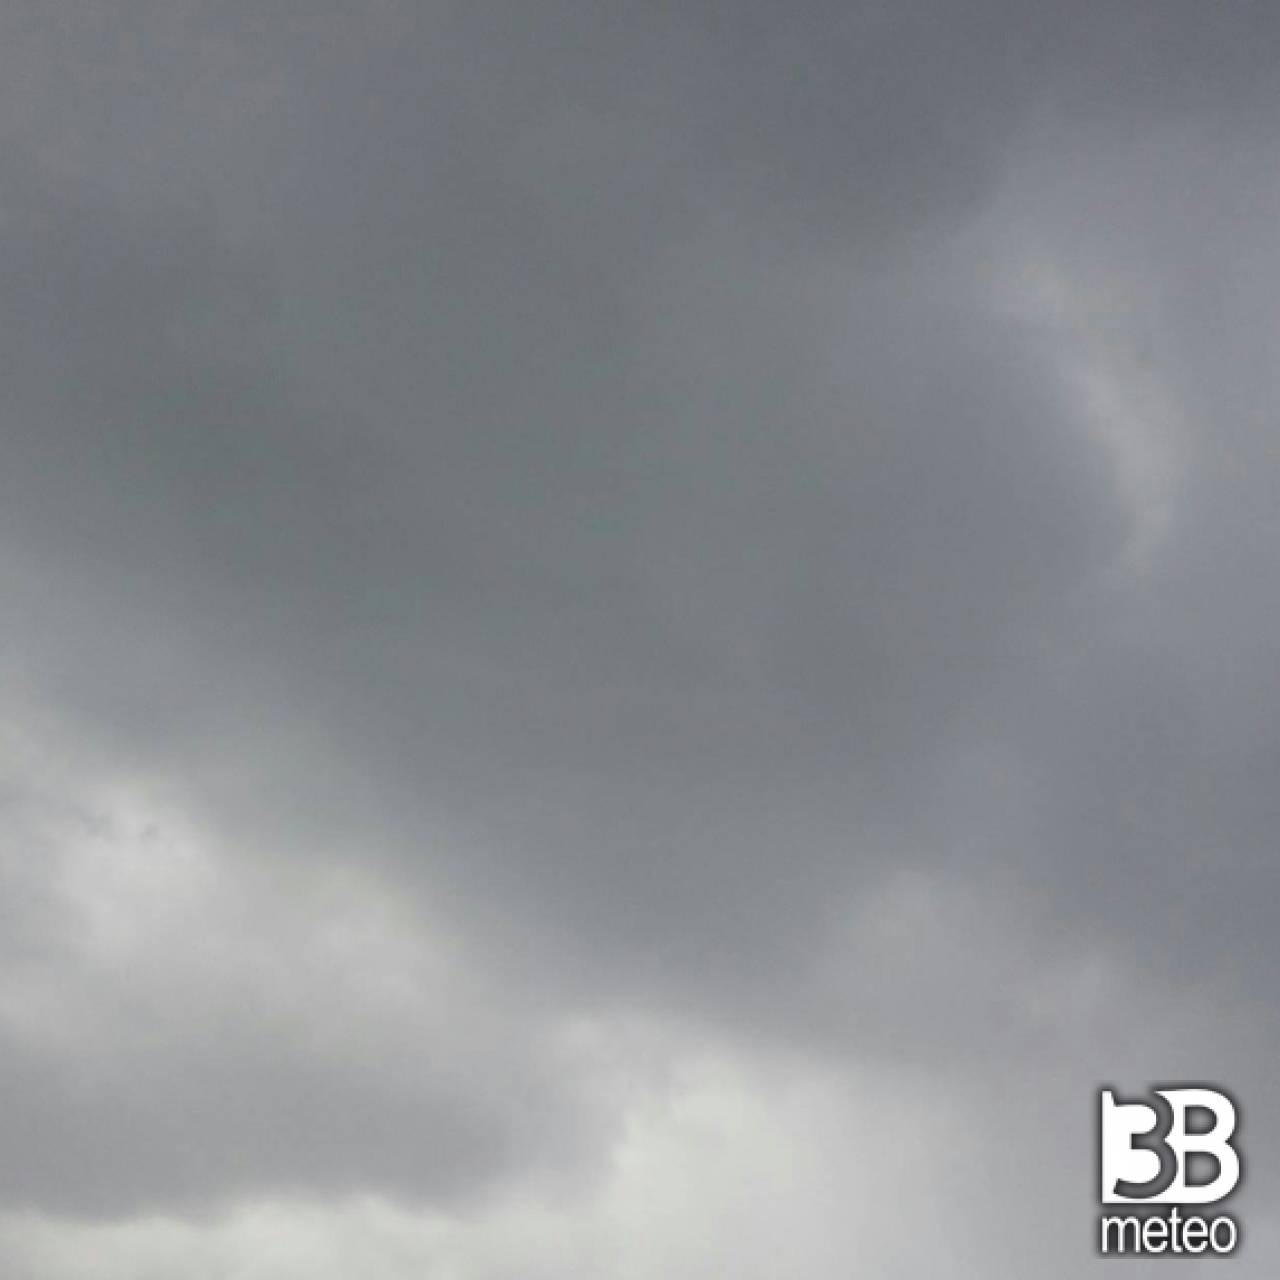 Meteo Cremona: molte nubi martedì, discreto mercoledì, molte nubi ... - 3bmeteo